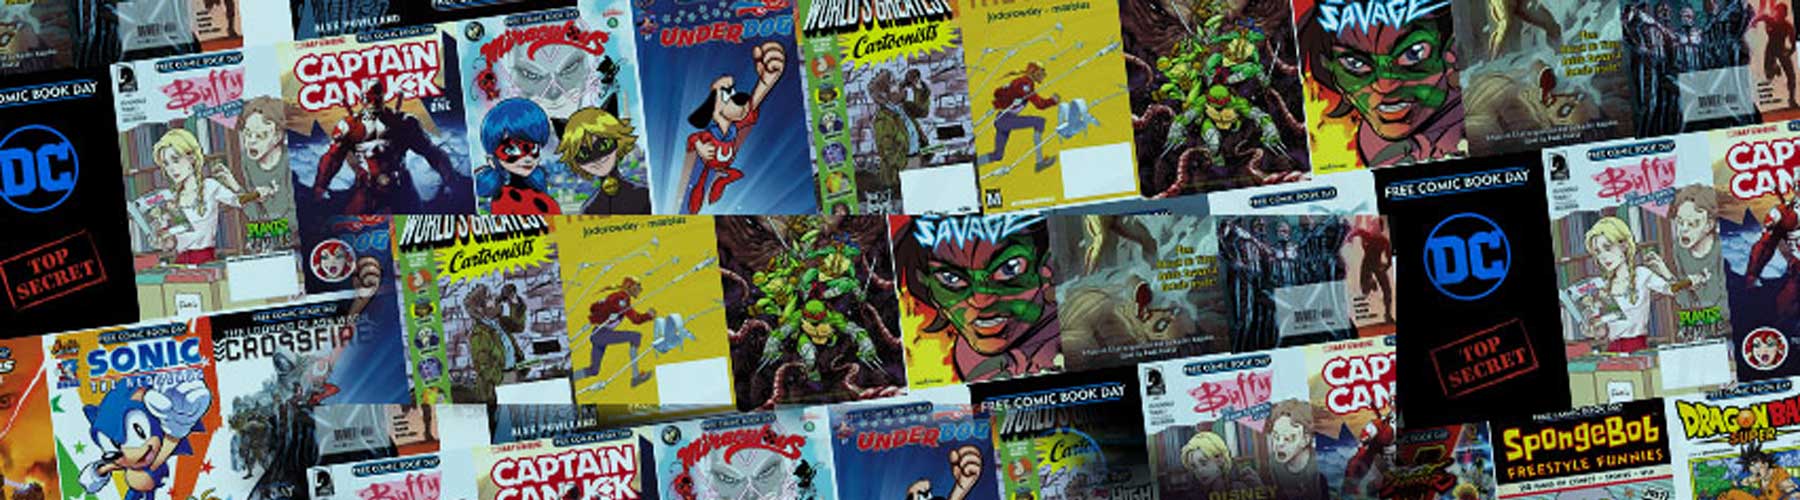 Free Comic Book Day 2021 Comics